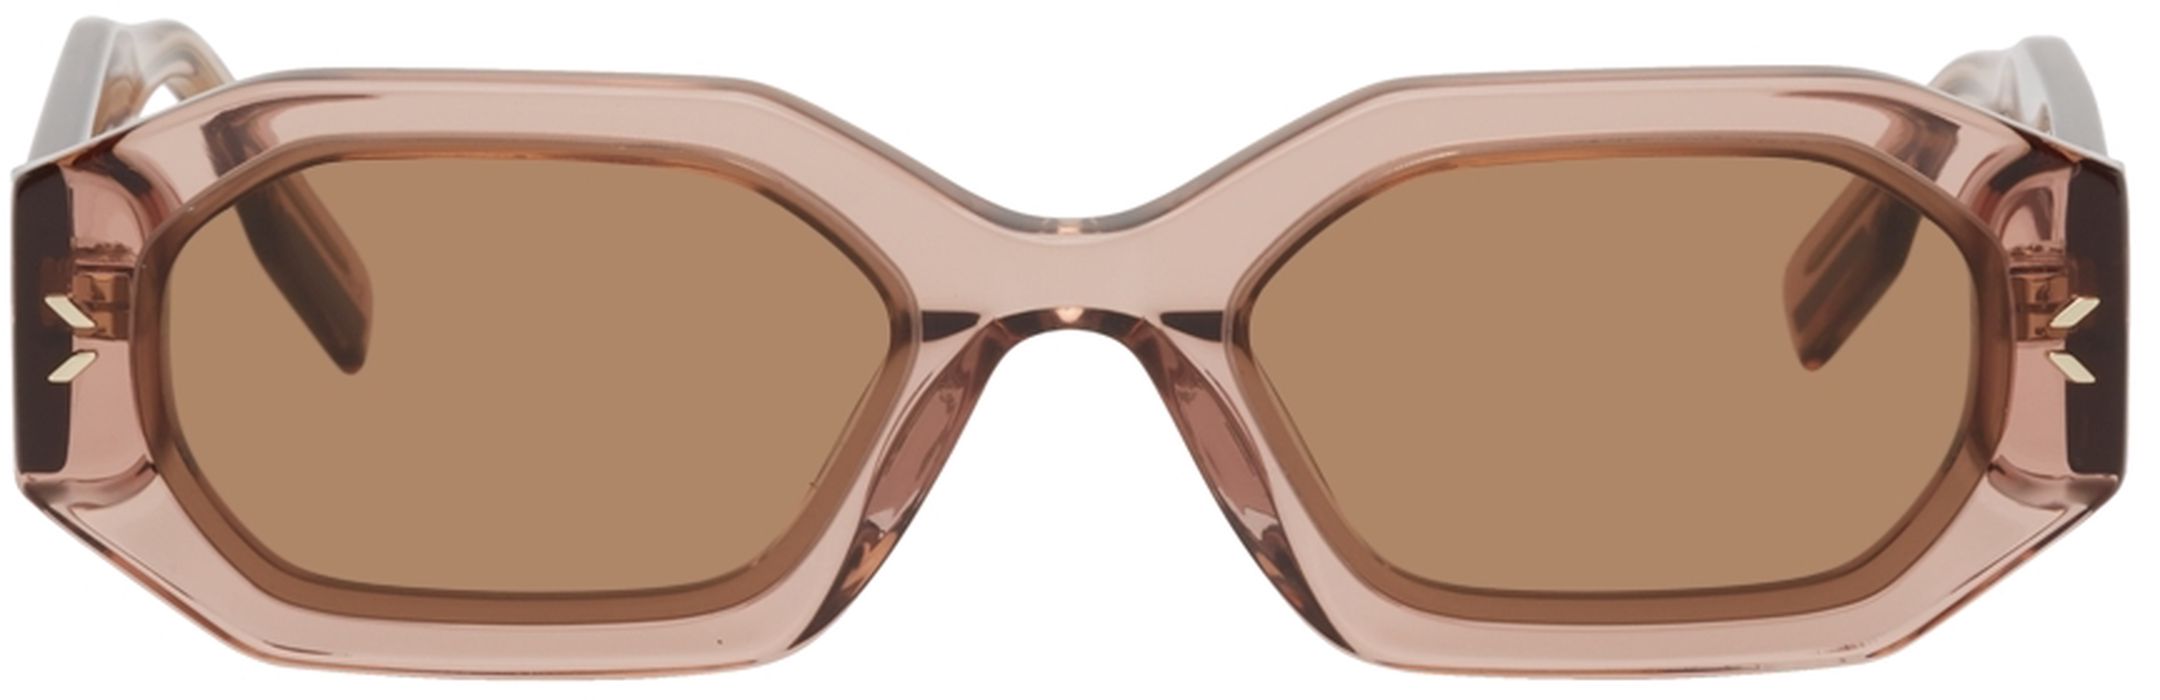 MCQ Pink Acetate Geometrical Sunglasses